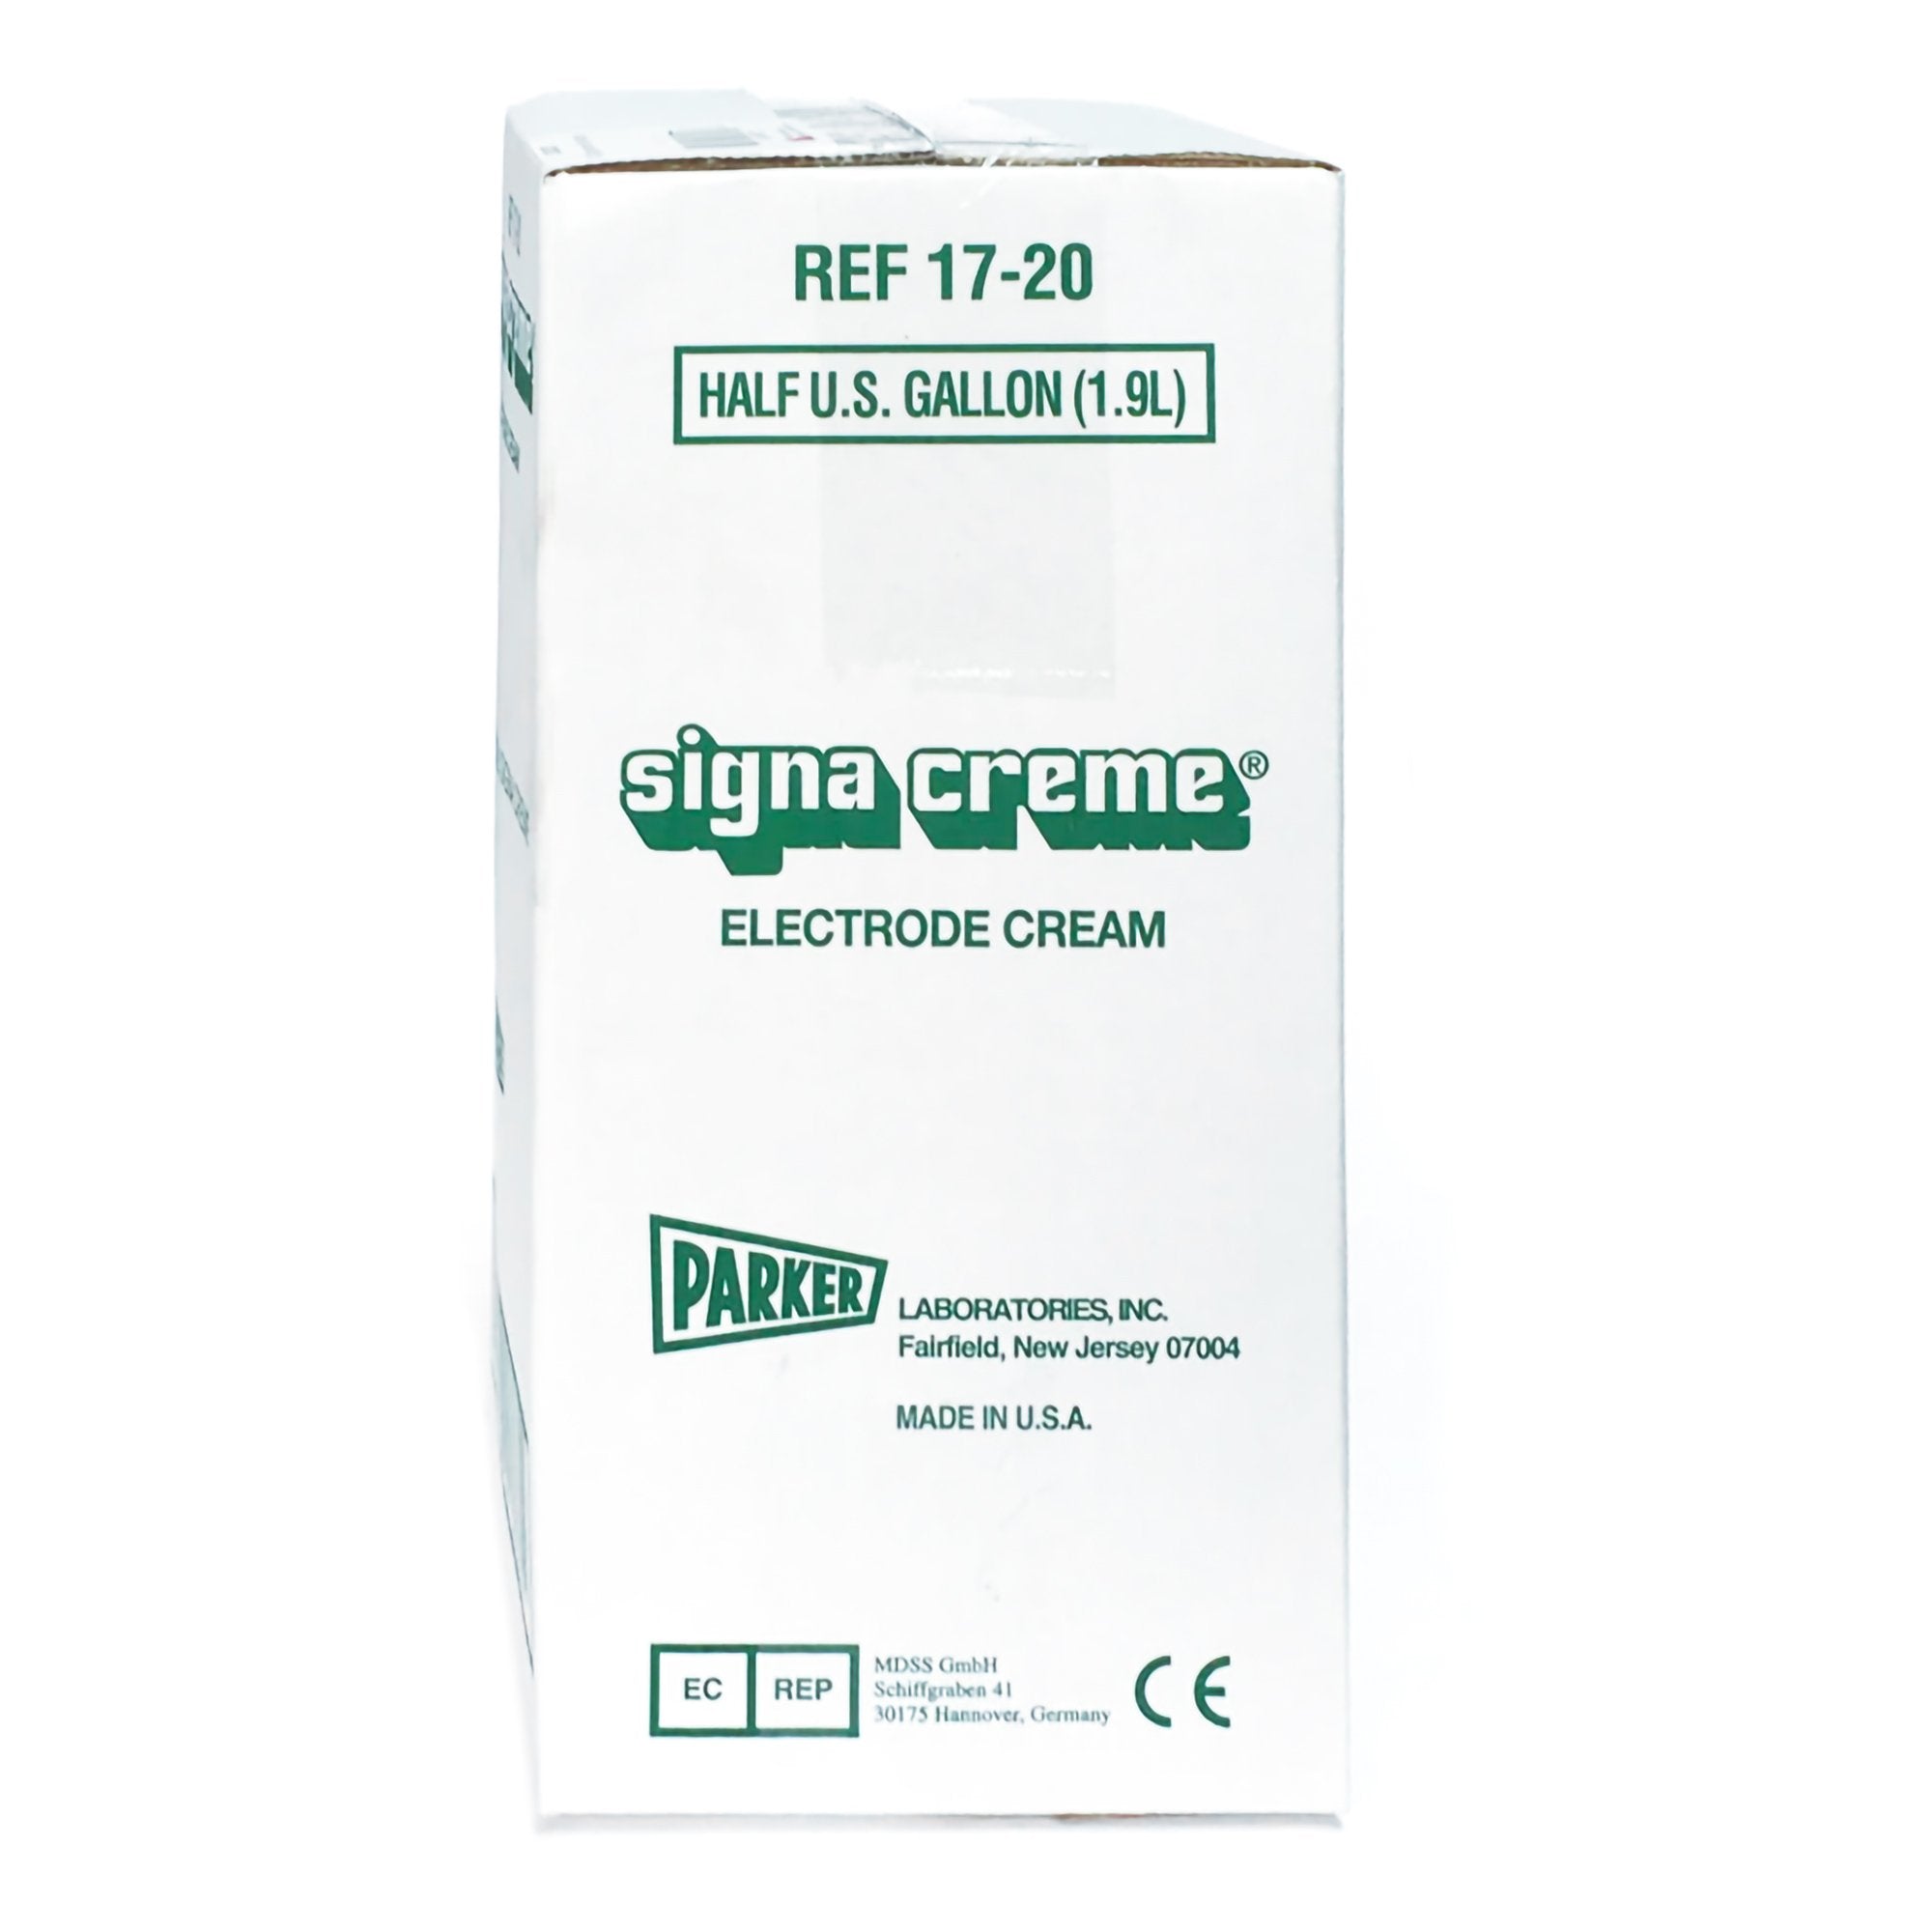 Electrode Cream Signacreme® Highly Conductive 1.9 Liter (1/2 Gallon) Jar